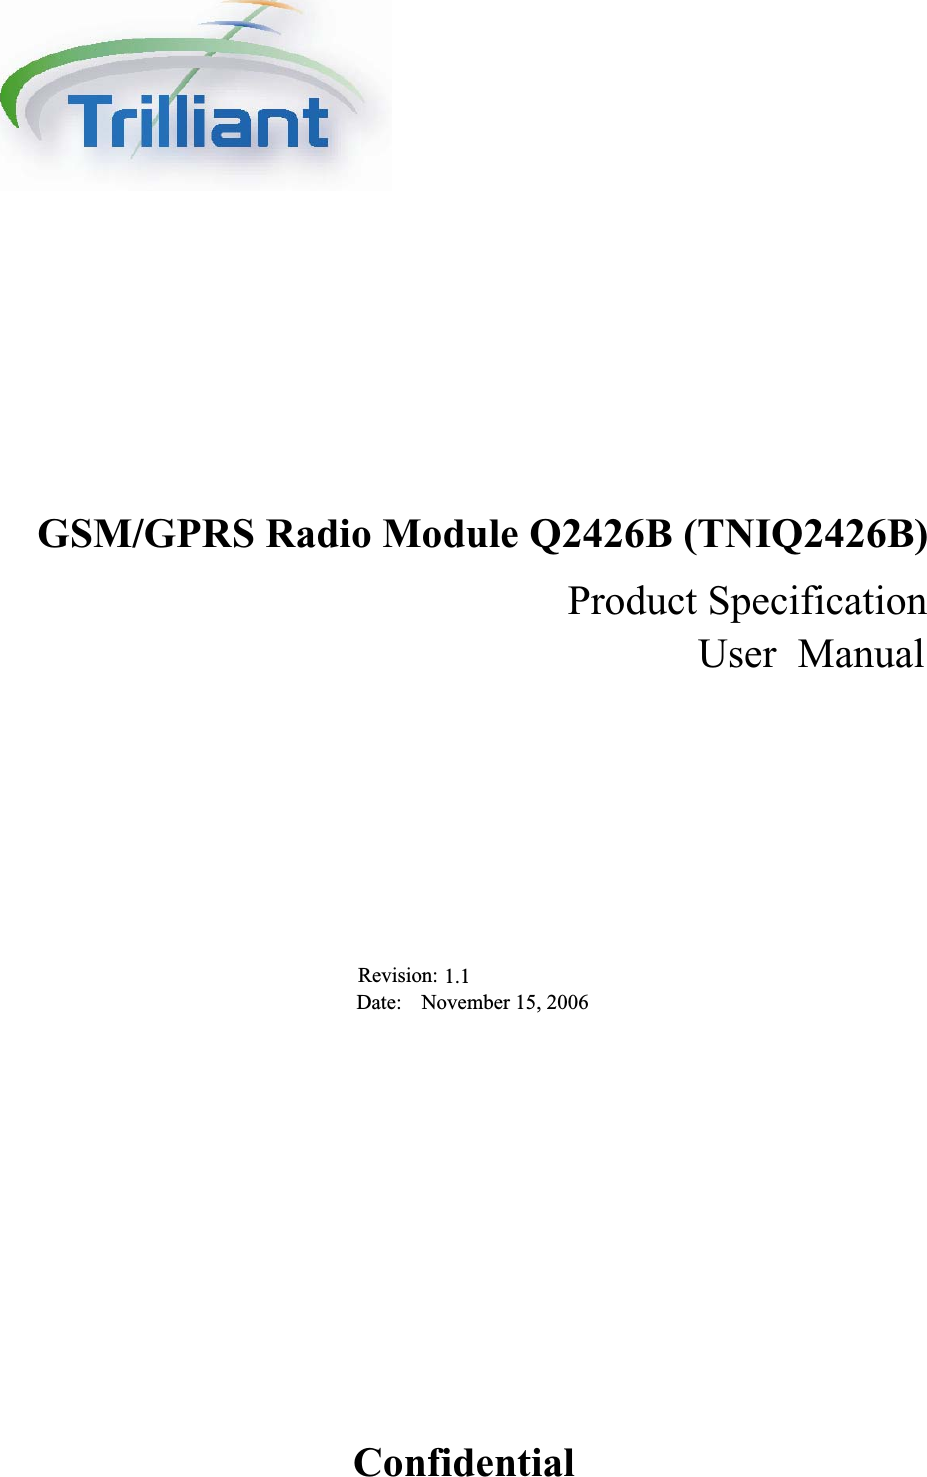   GSM/GPRS Radio Module Q2426B (TNIQ2426B)  Product Specification               User Manual Revision: 1.1  Date: November 15, 2006    Confidential 